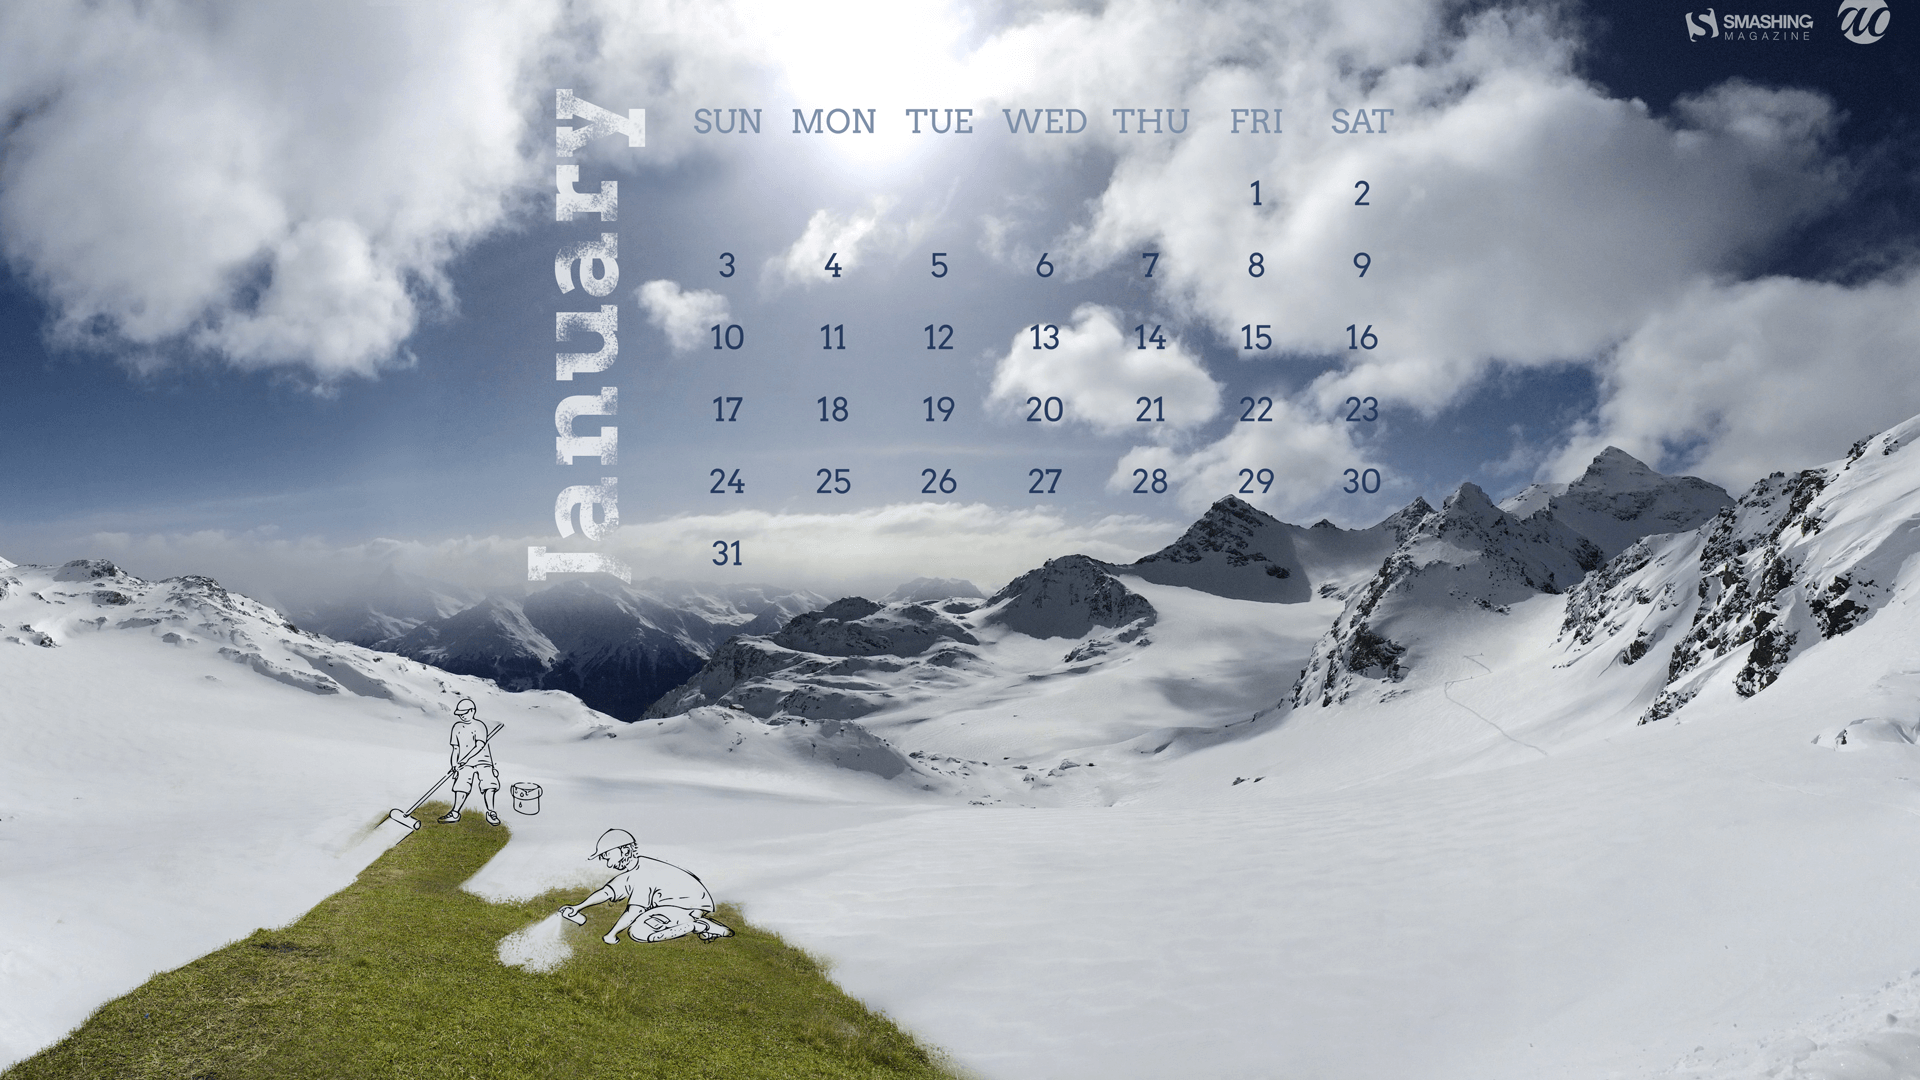 January 2016 Calendar Desktop Wallpaper 2016 Happy Holidays Day 2016